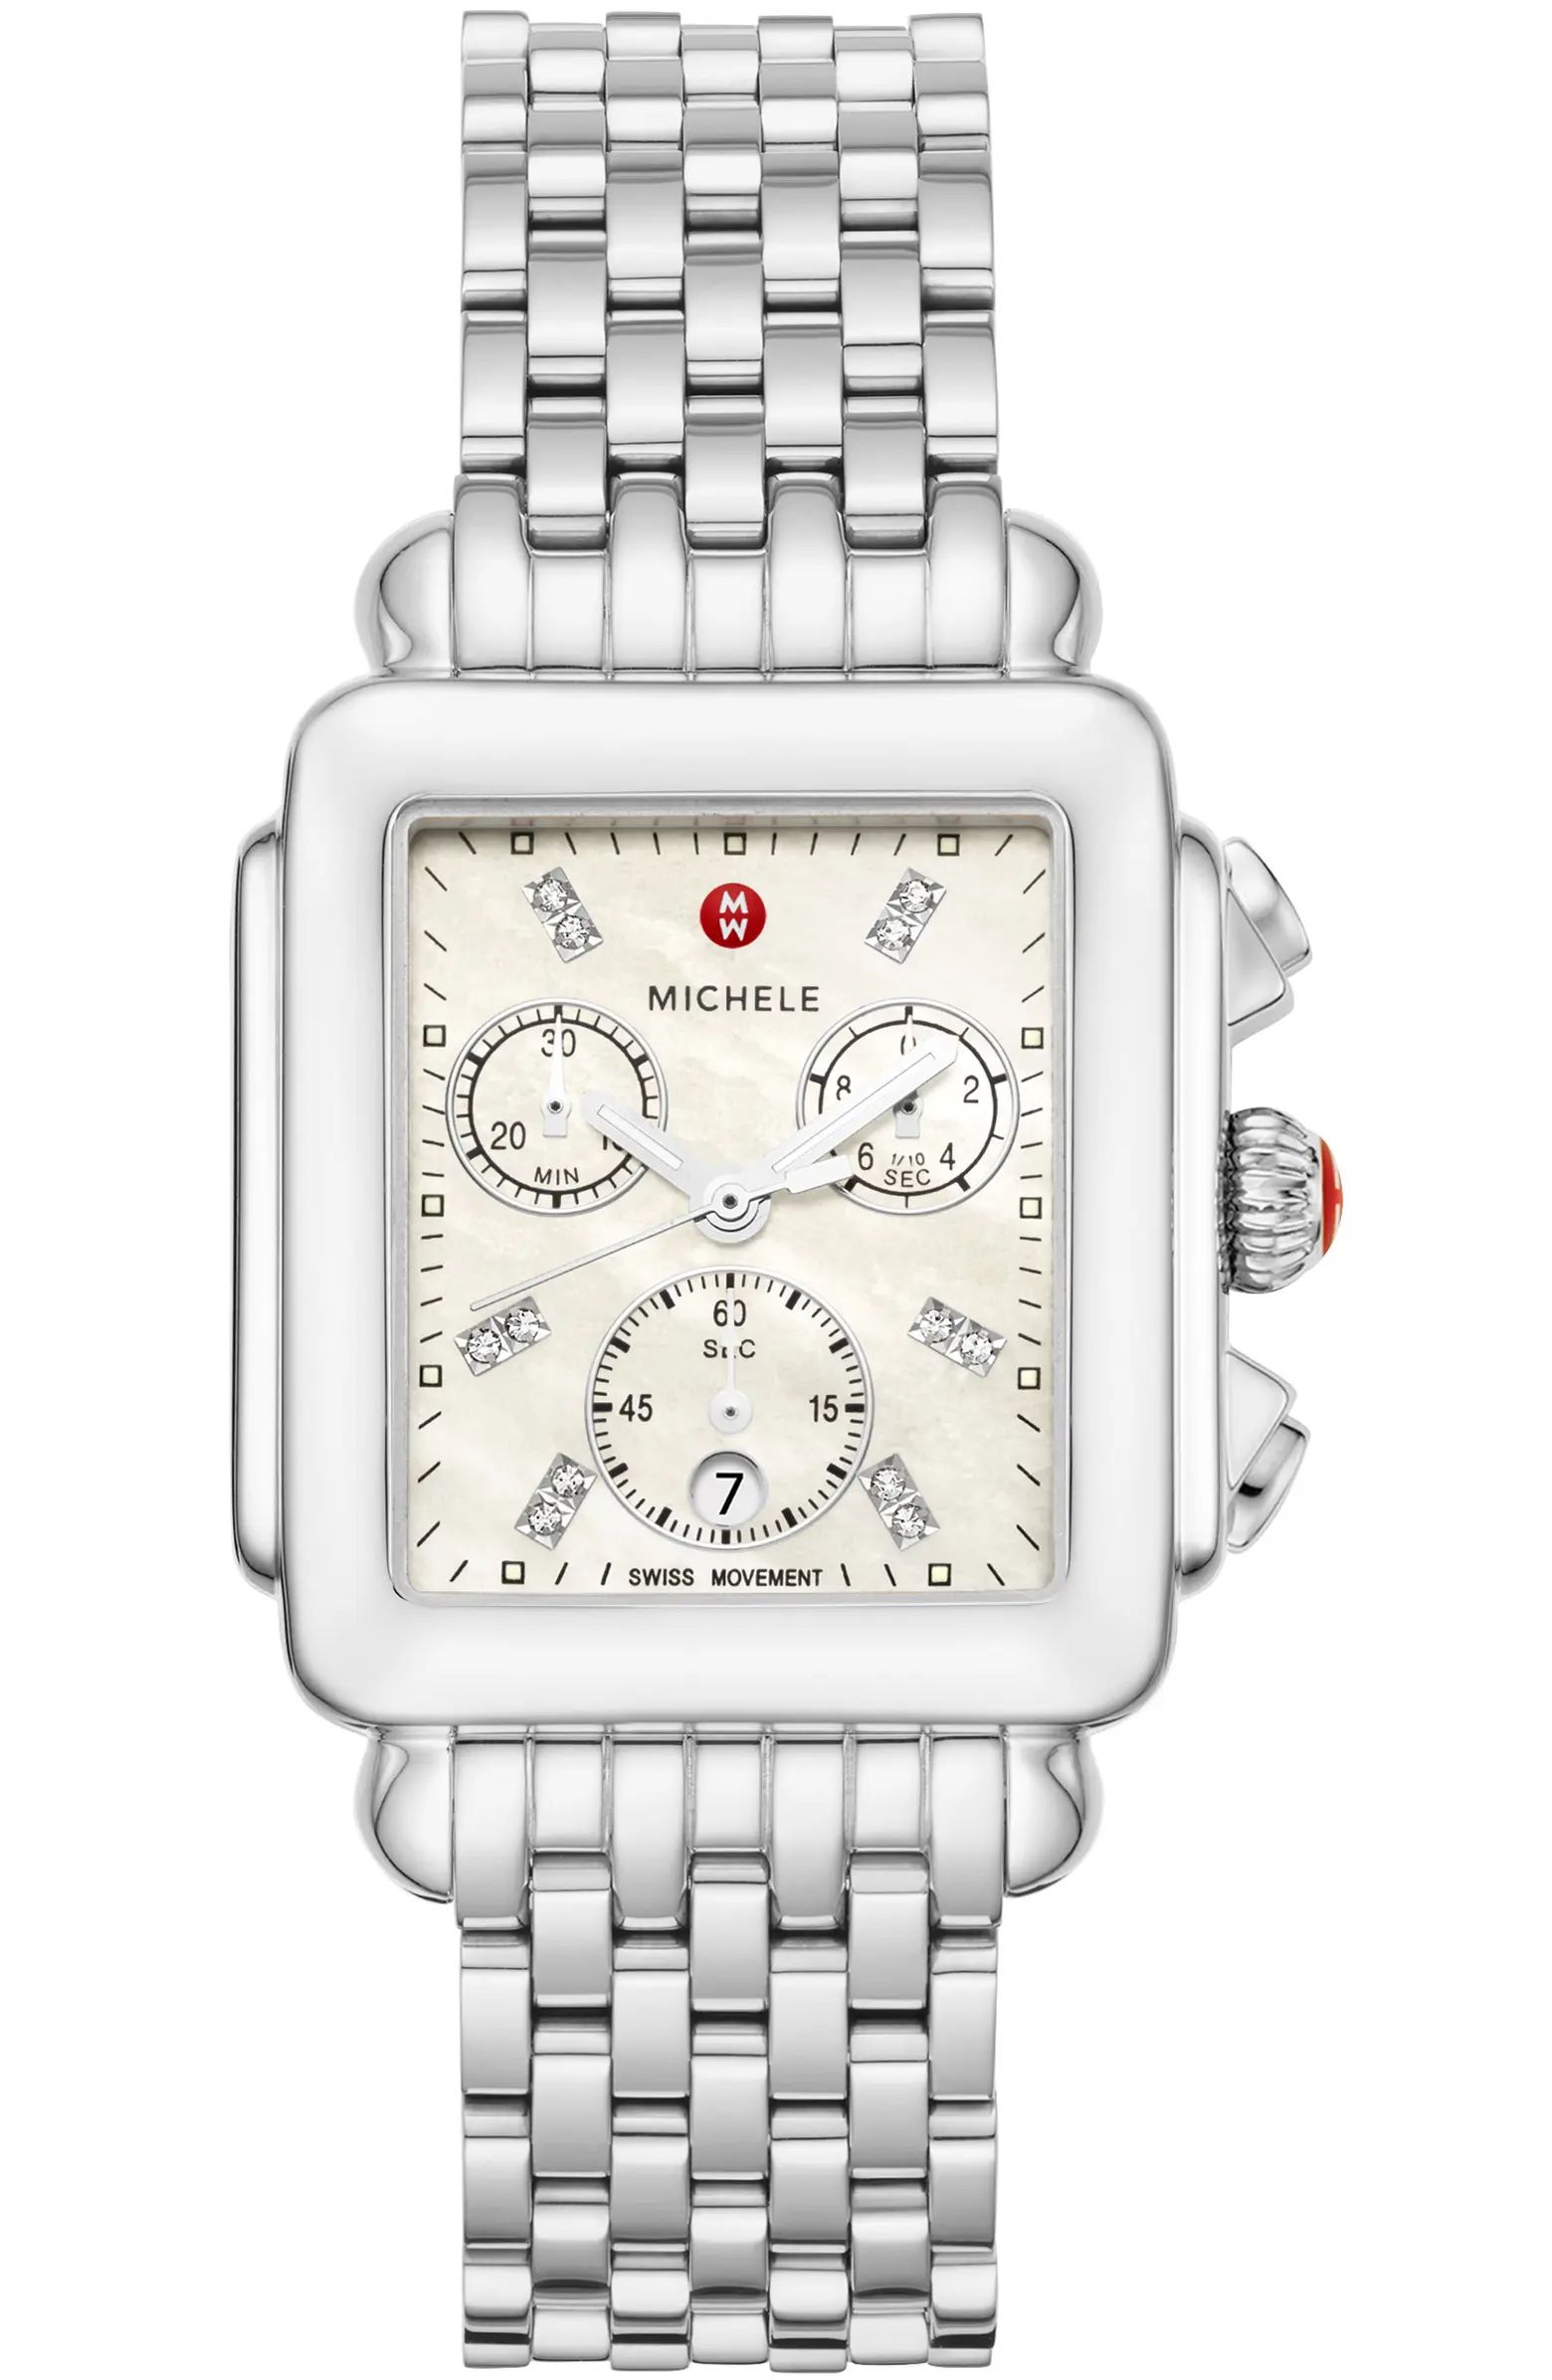 Deco Diamond Chronograph Bracelet Watch, 33mm | Nordstrom